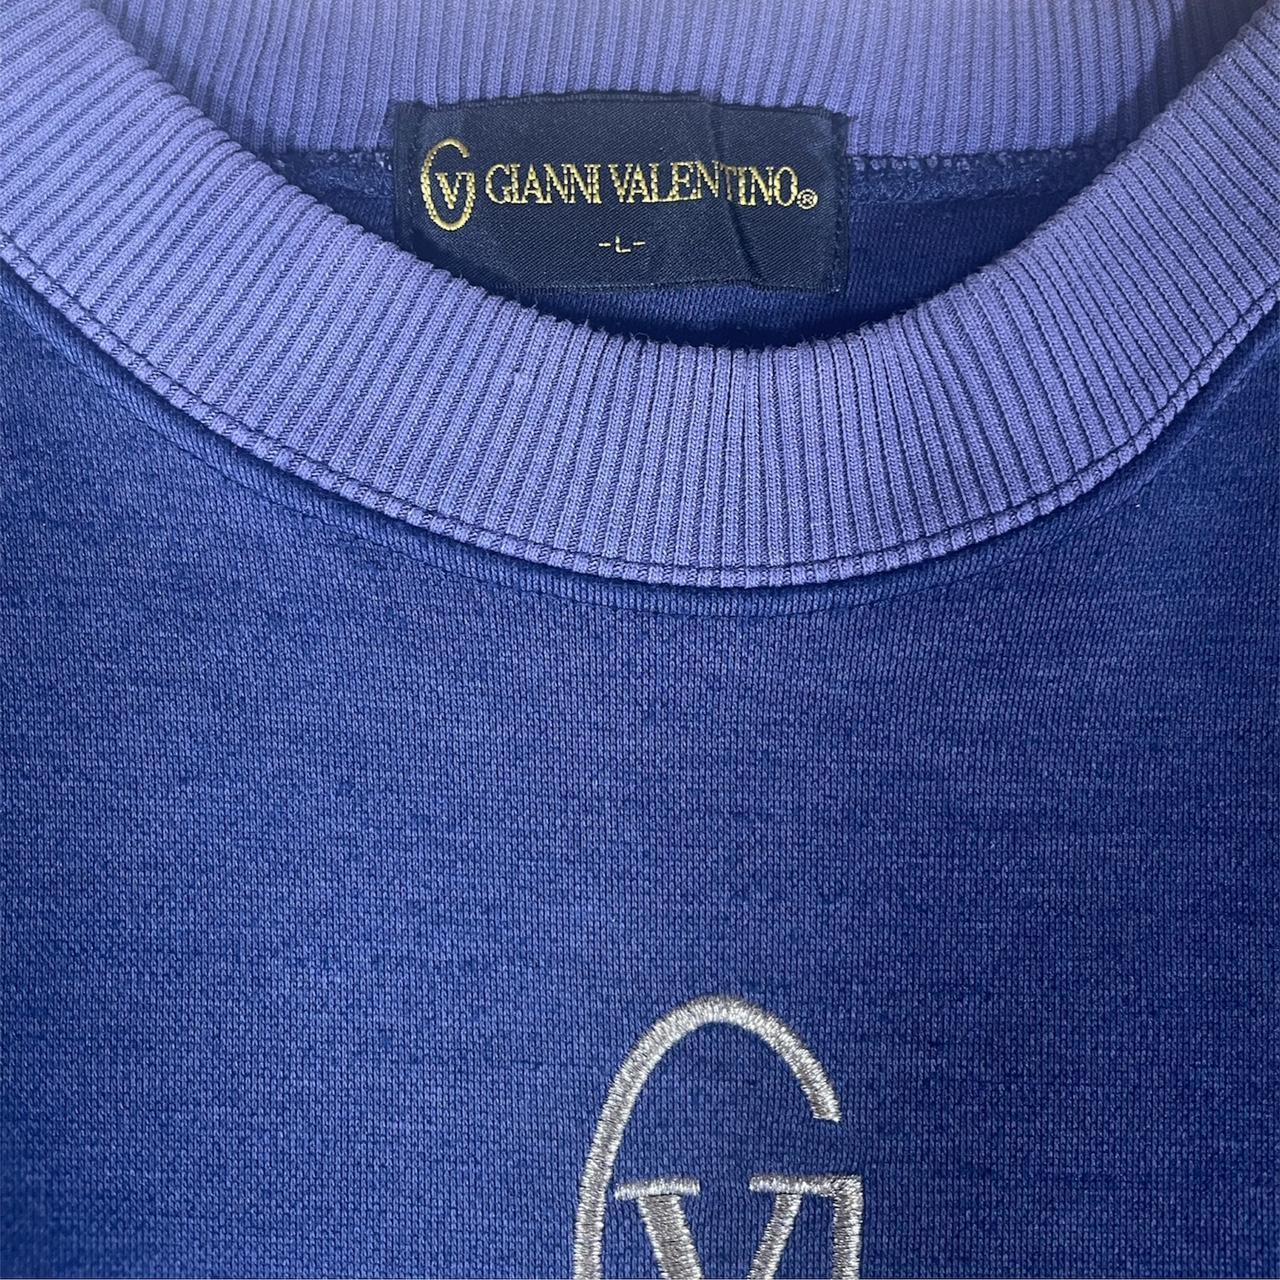 Valentino Men's Navy and Blue Sweatshirt (3)